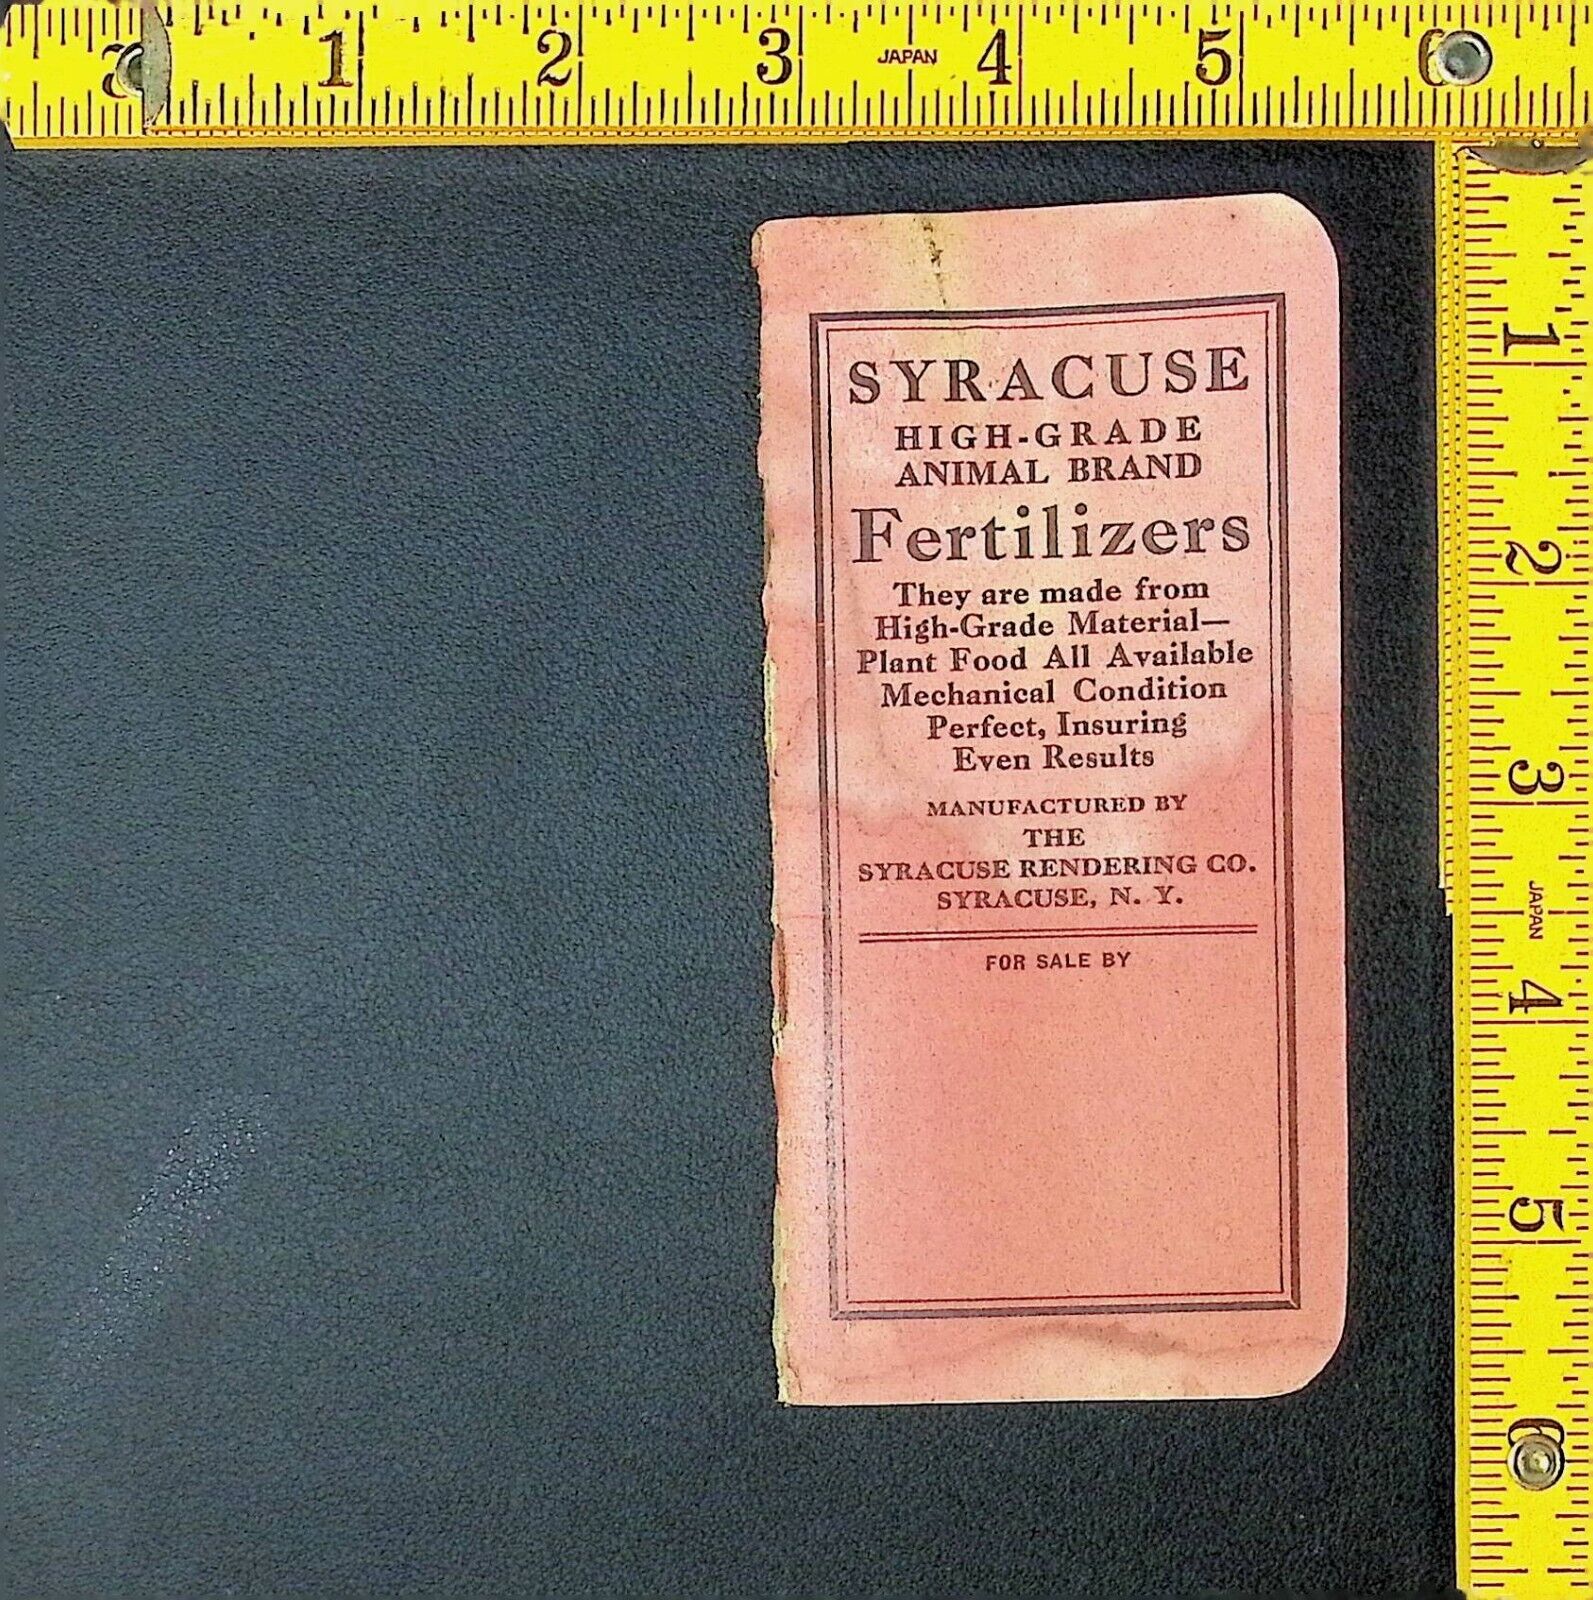 1925 Syracuse High Grade Animal Brand Fertilizer Notebook and Calendar - VINTAGE